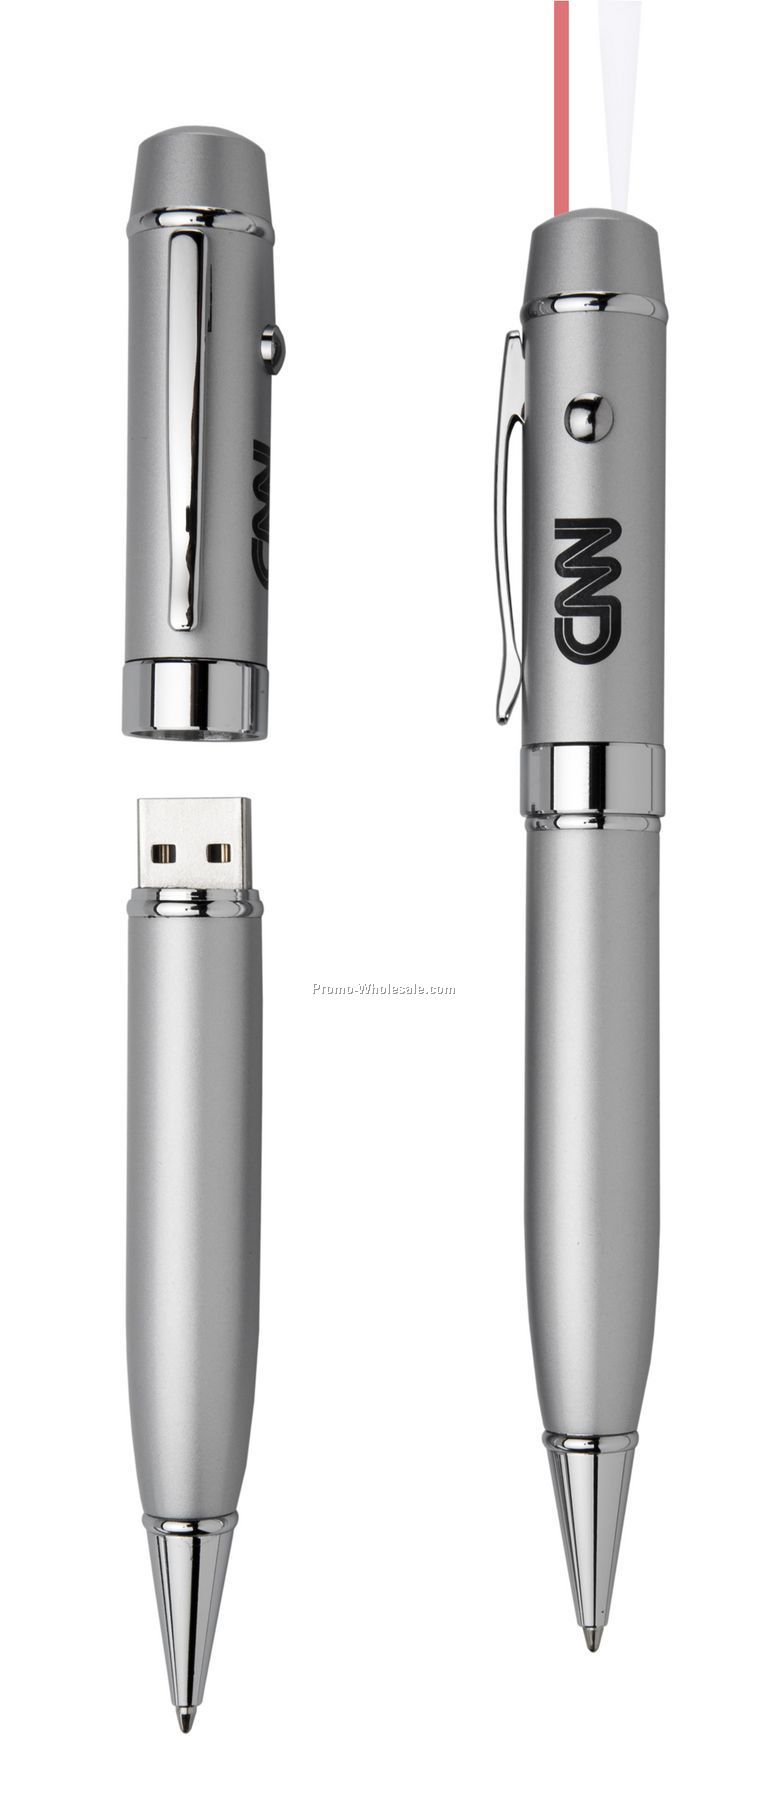 Hora 4-in-1 USB Pen